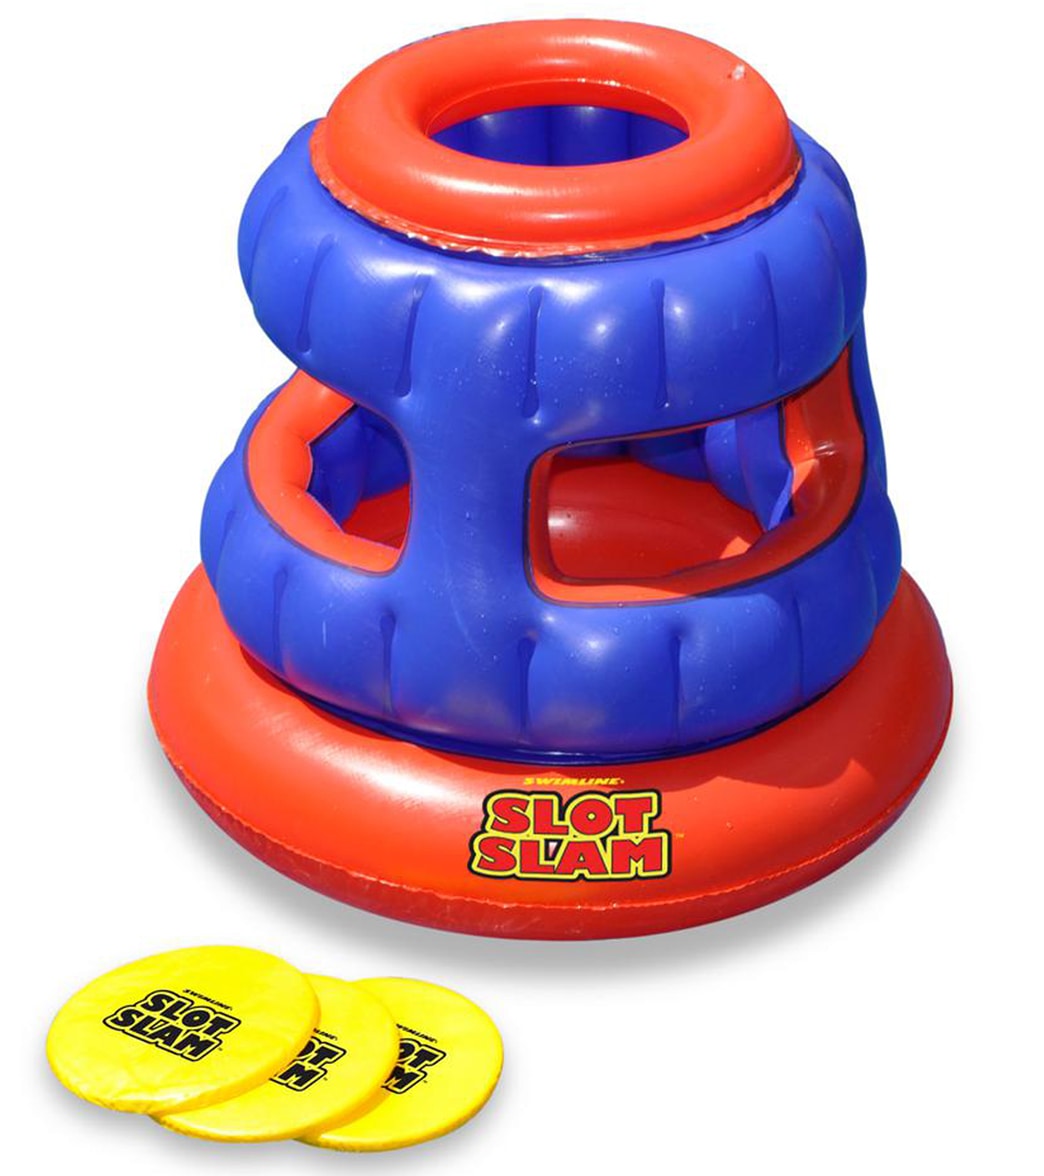 Swimline Slot Slam Disc Toss Game - Red - Swimoutlet.com